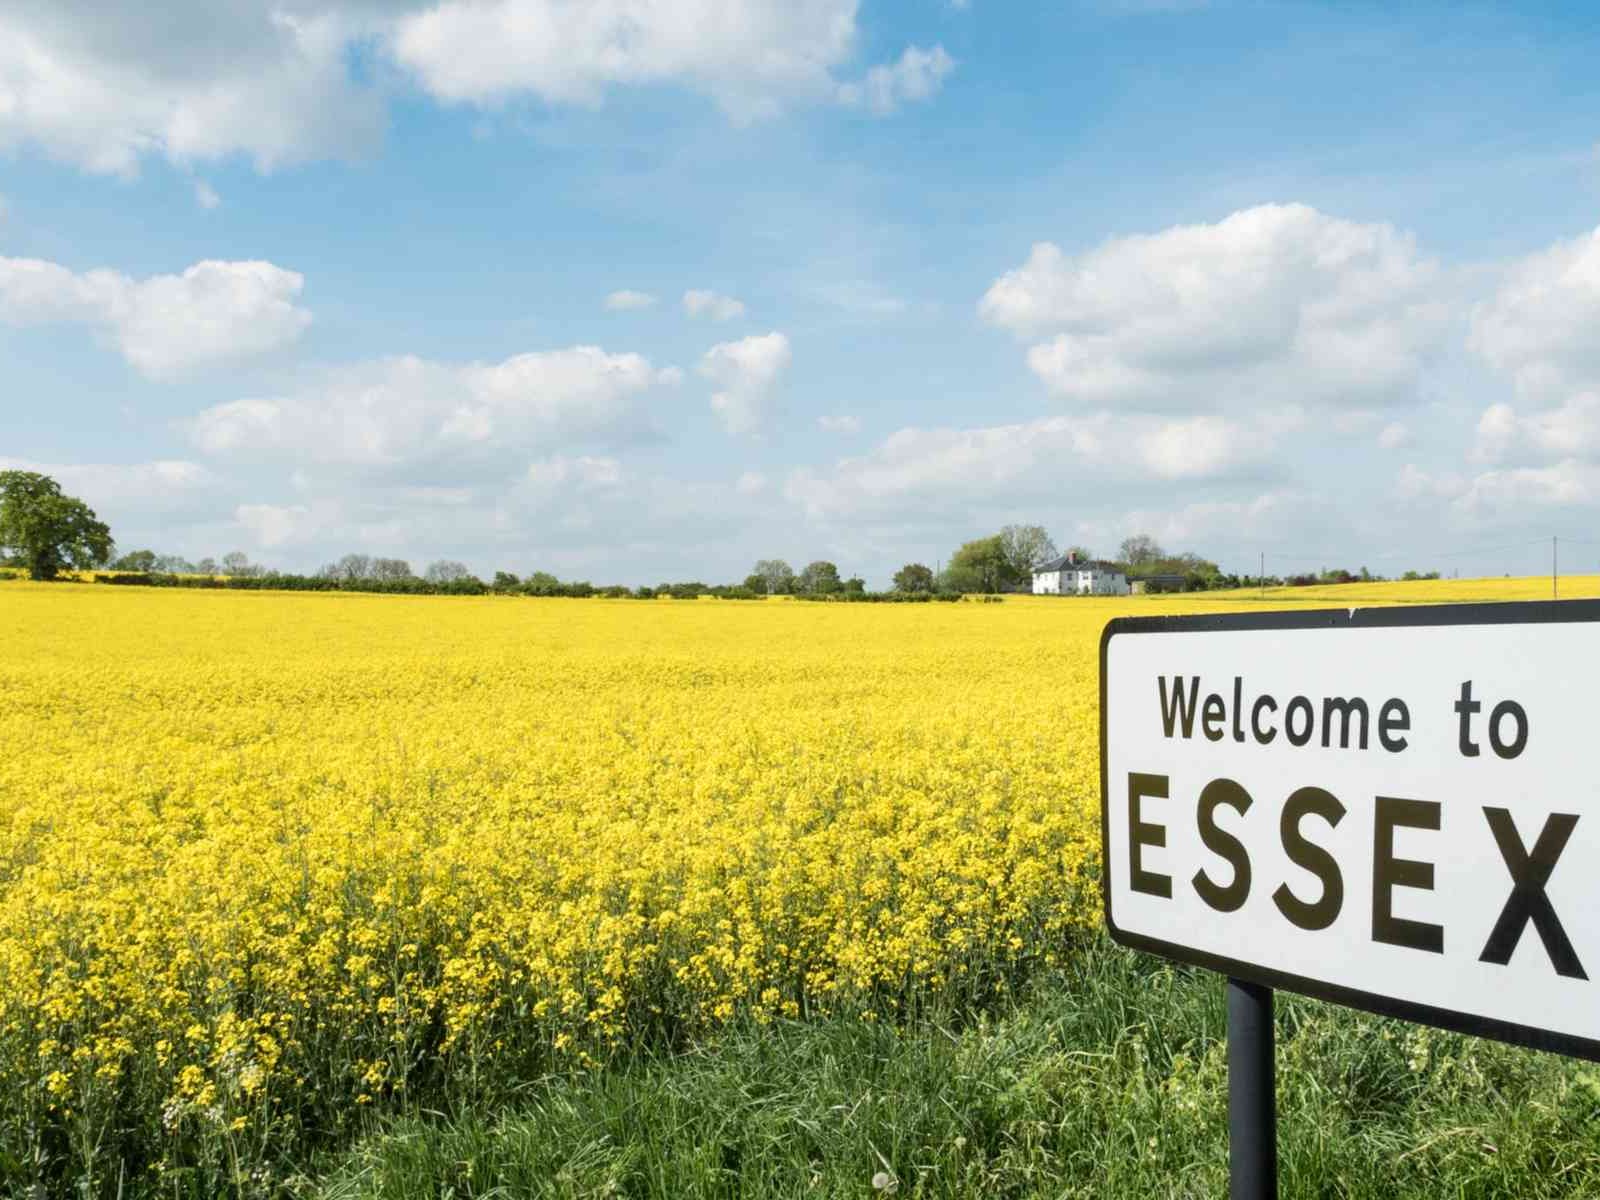 Essex in eastern England